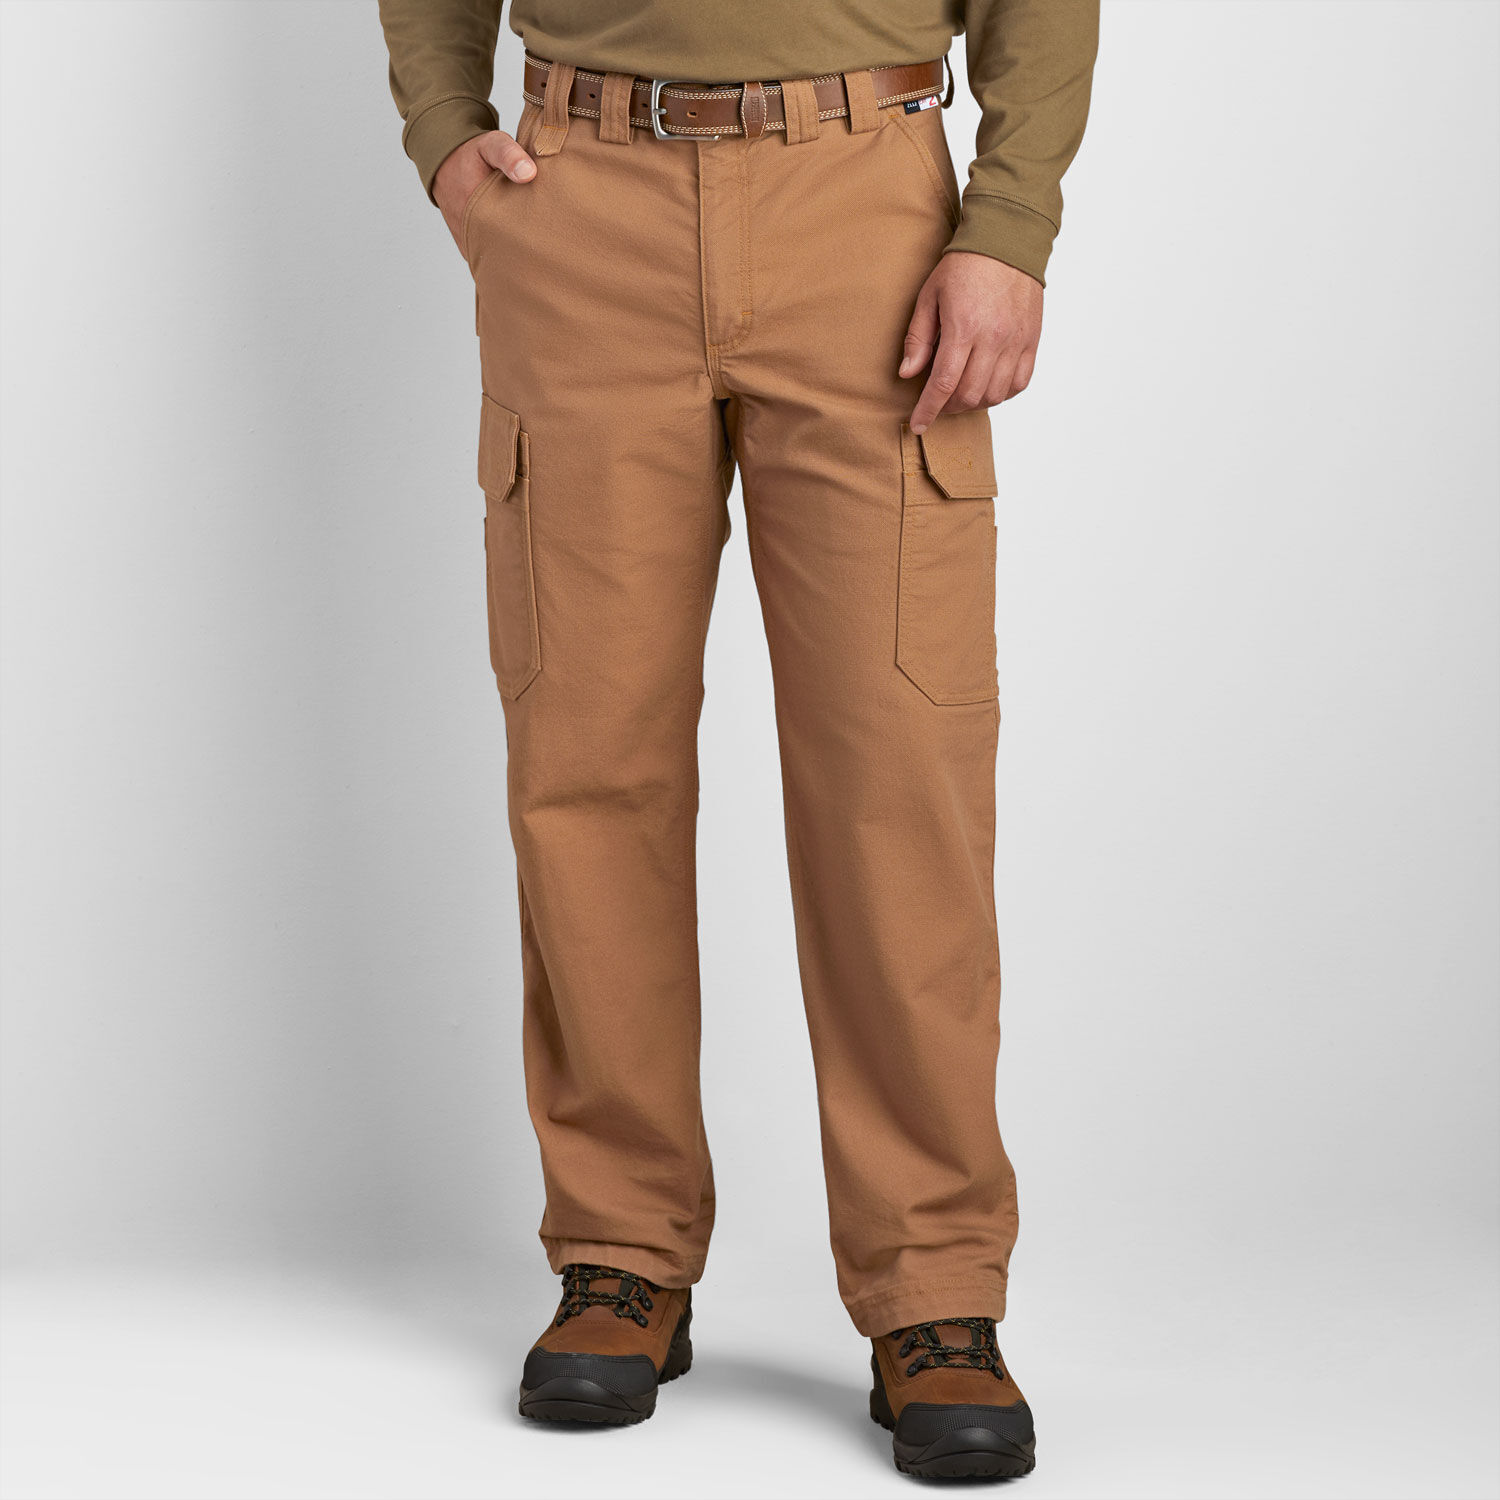 Lapco Mens Fire Resistant Reinforced Straight Cargo Work Pants khaki 36 W x  31 L | eBay